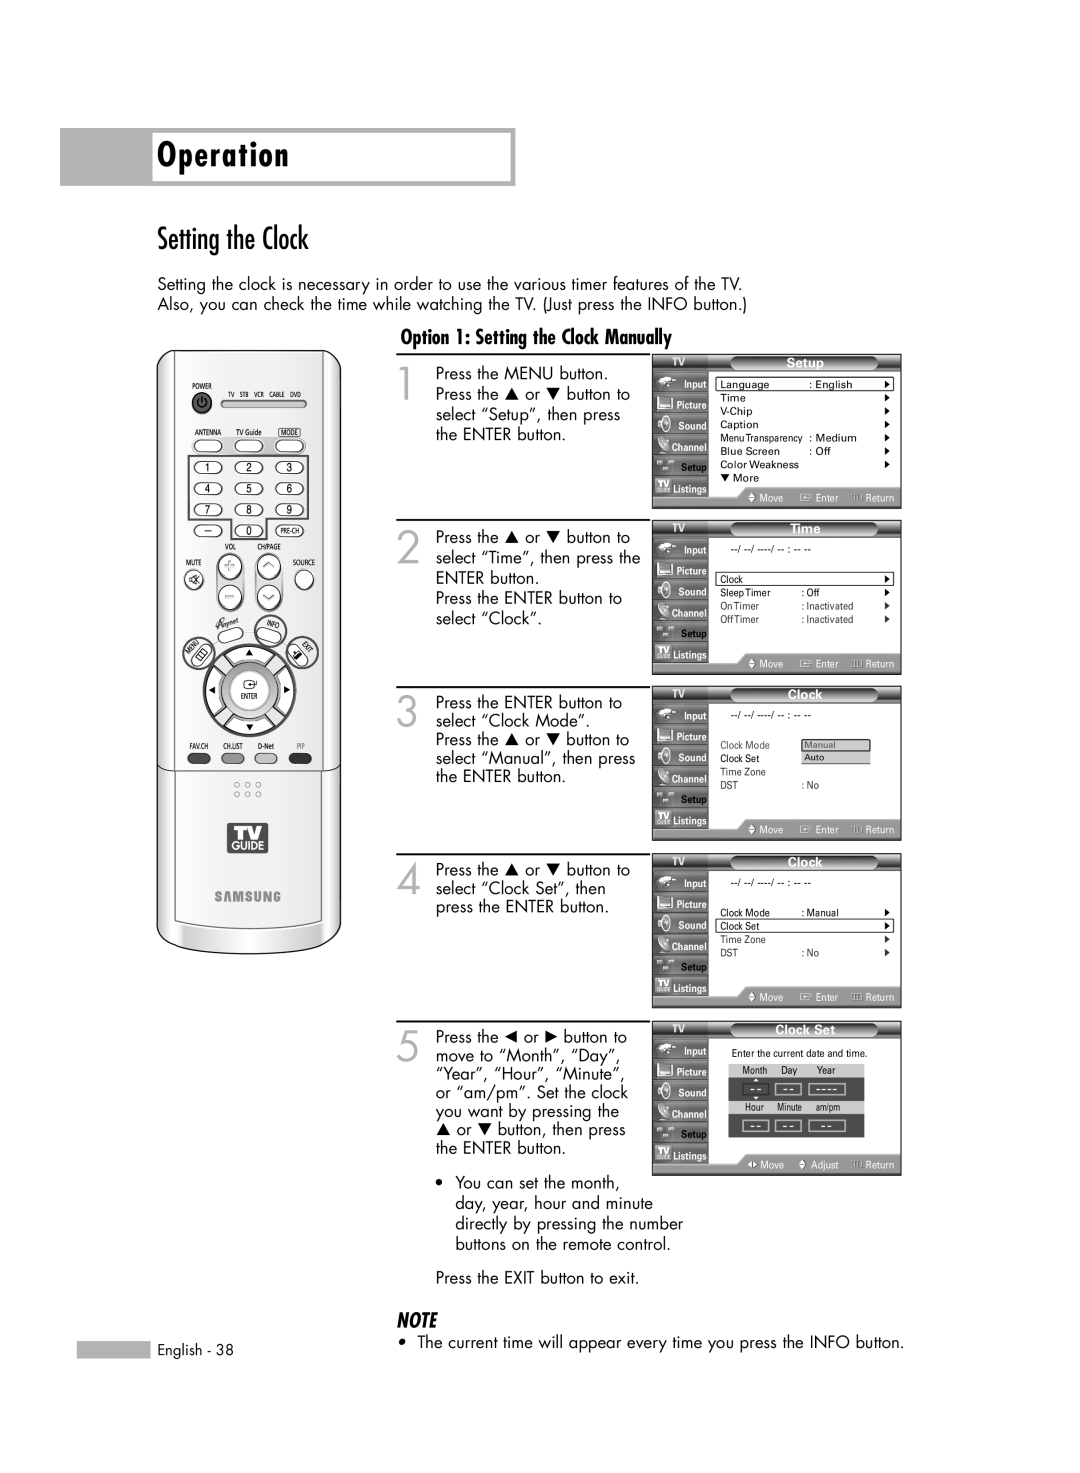 Samsung HL-R5688W manual Option 1 Setting the Clock Manually, Operation 